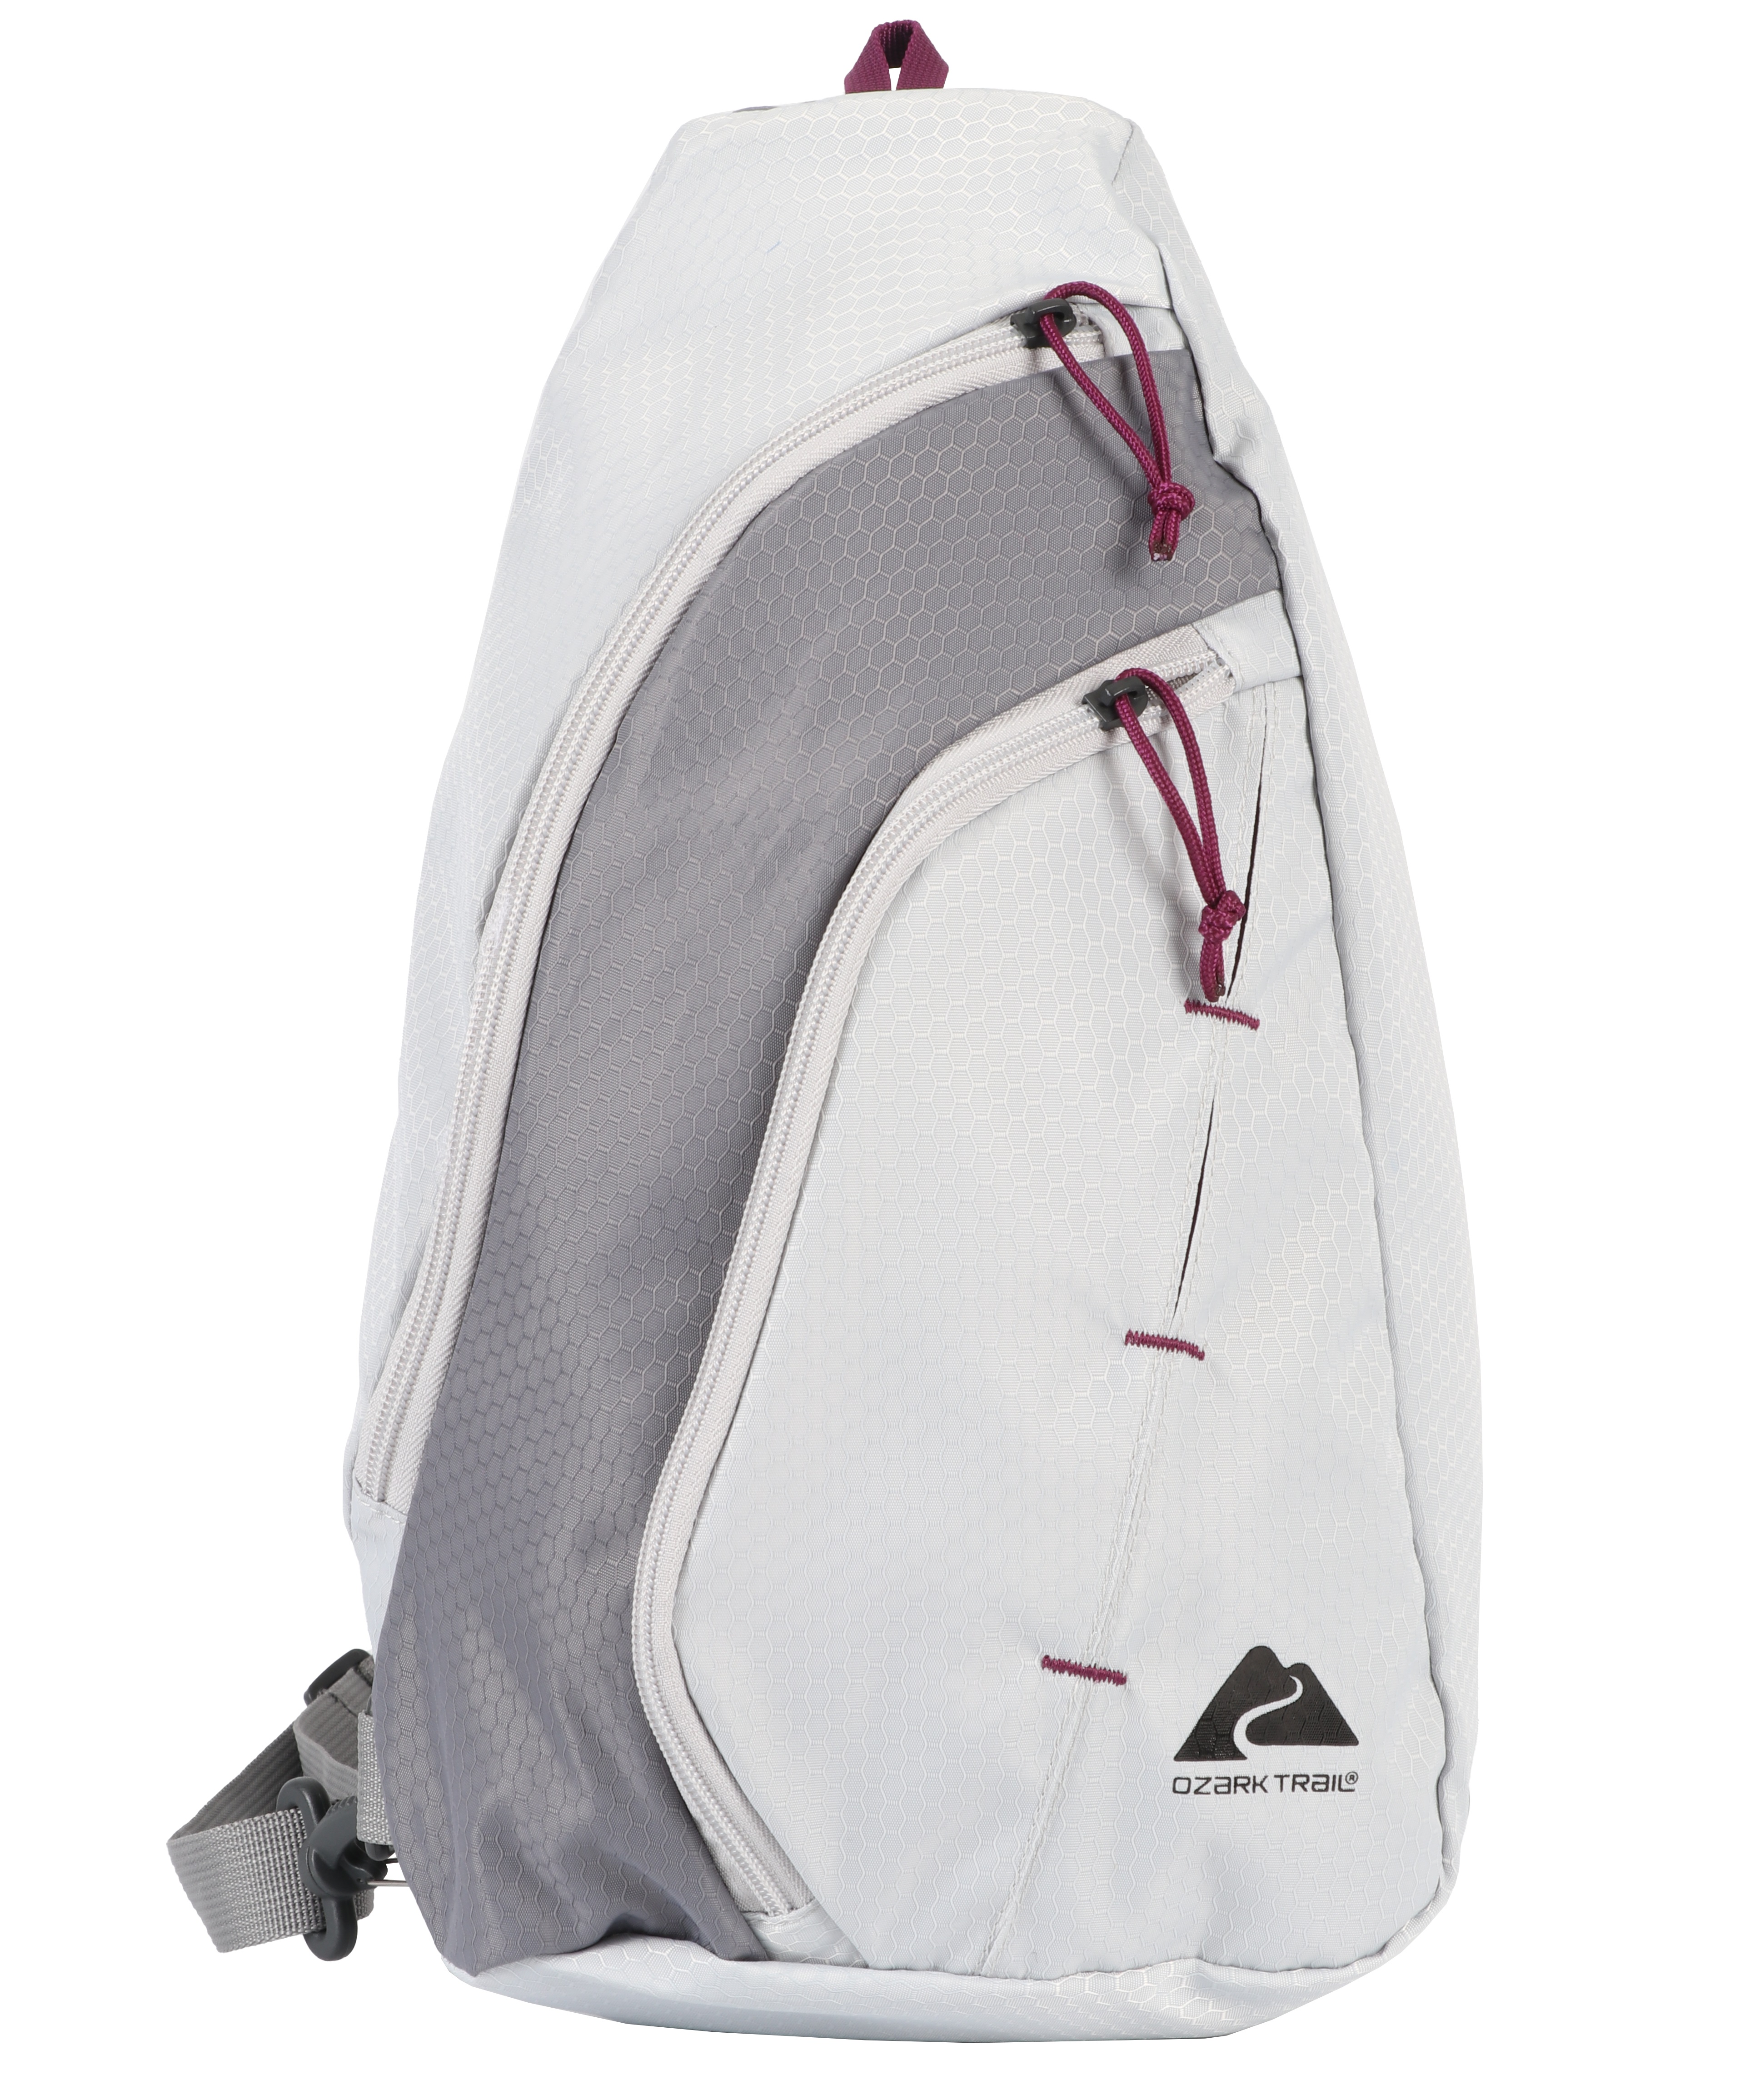 Ozark Trail 7 Liter Sling Backpack, Gray Polyester - image 1 of 6